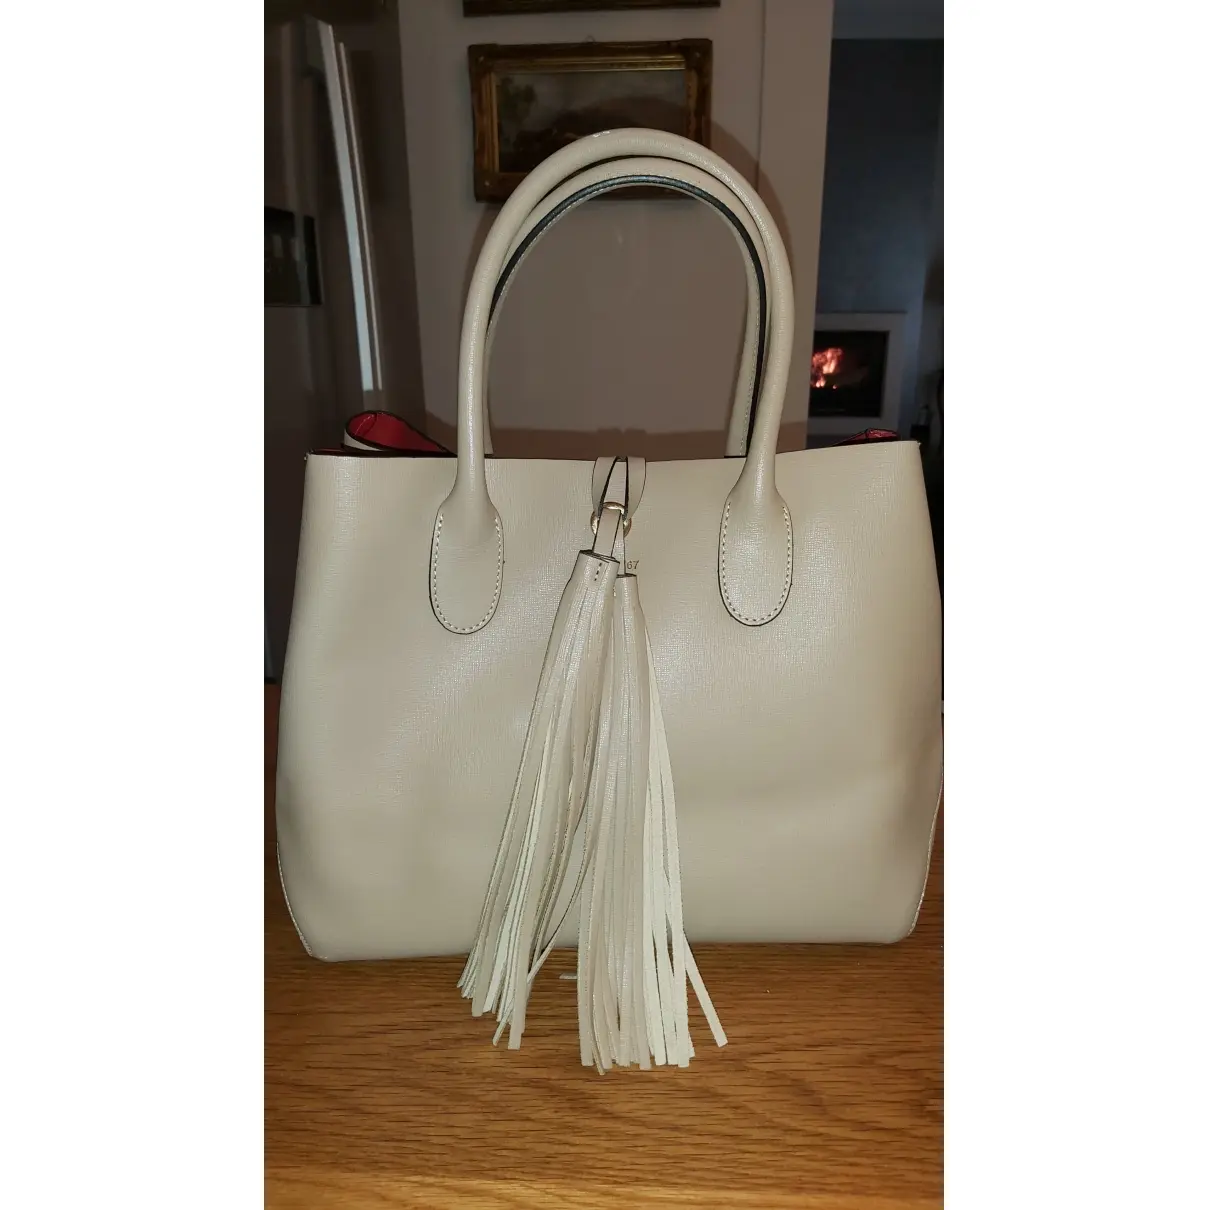 Buy avenue 67 Leather handbag online